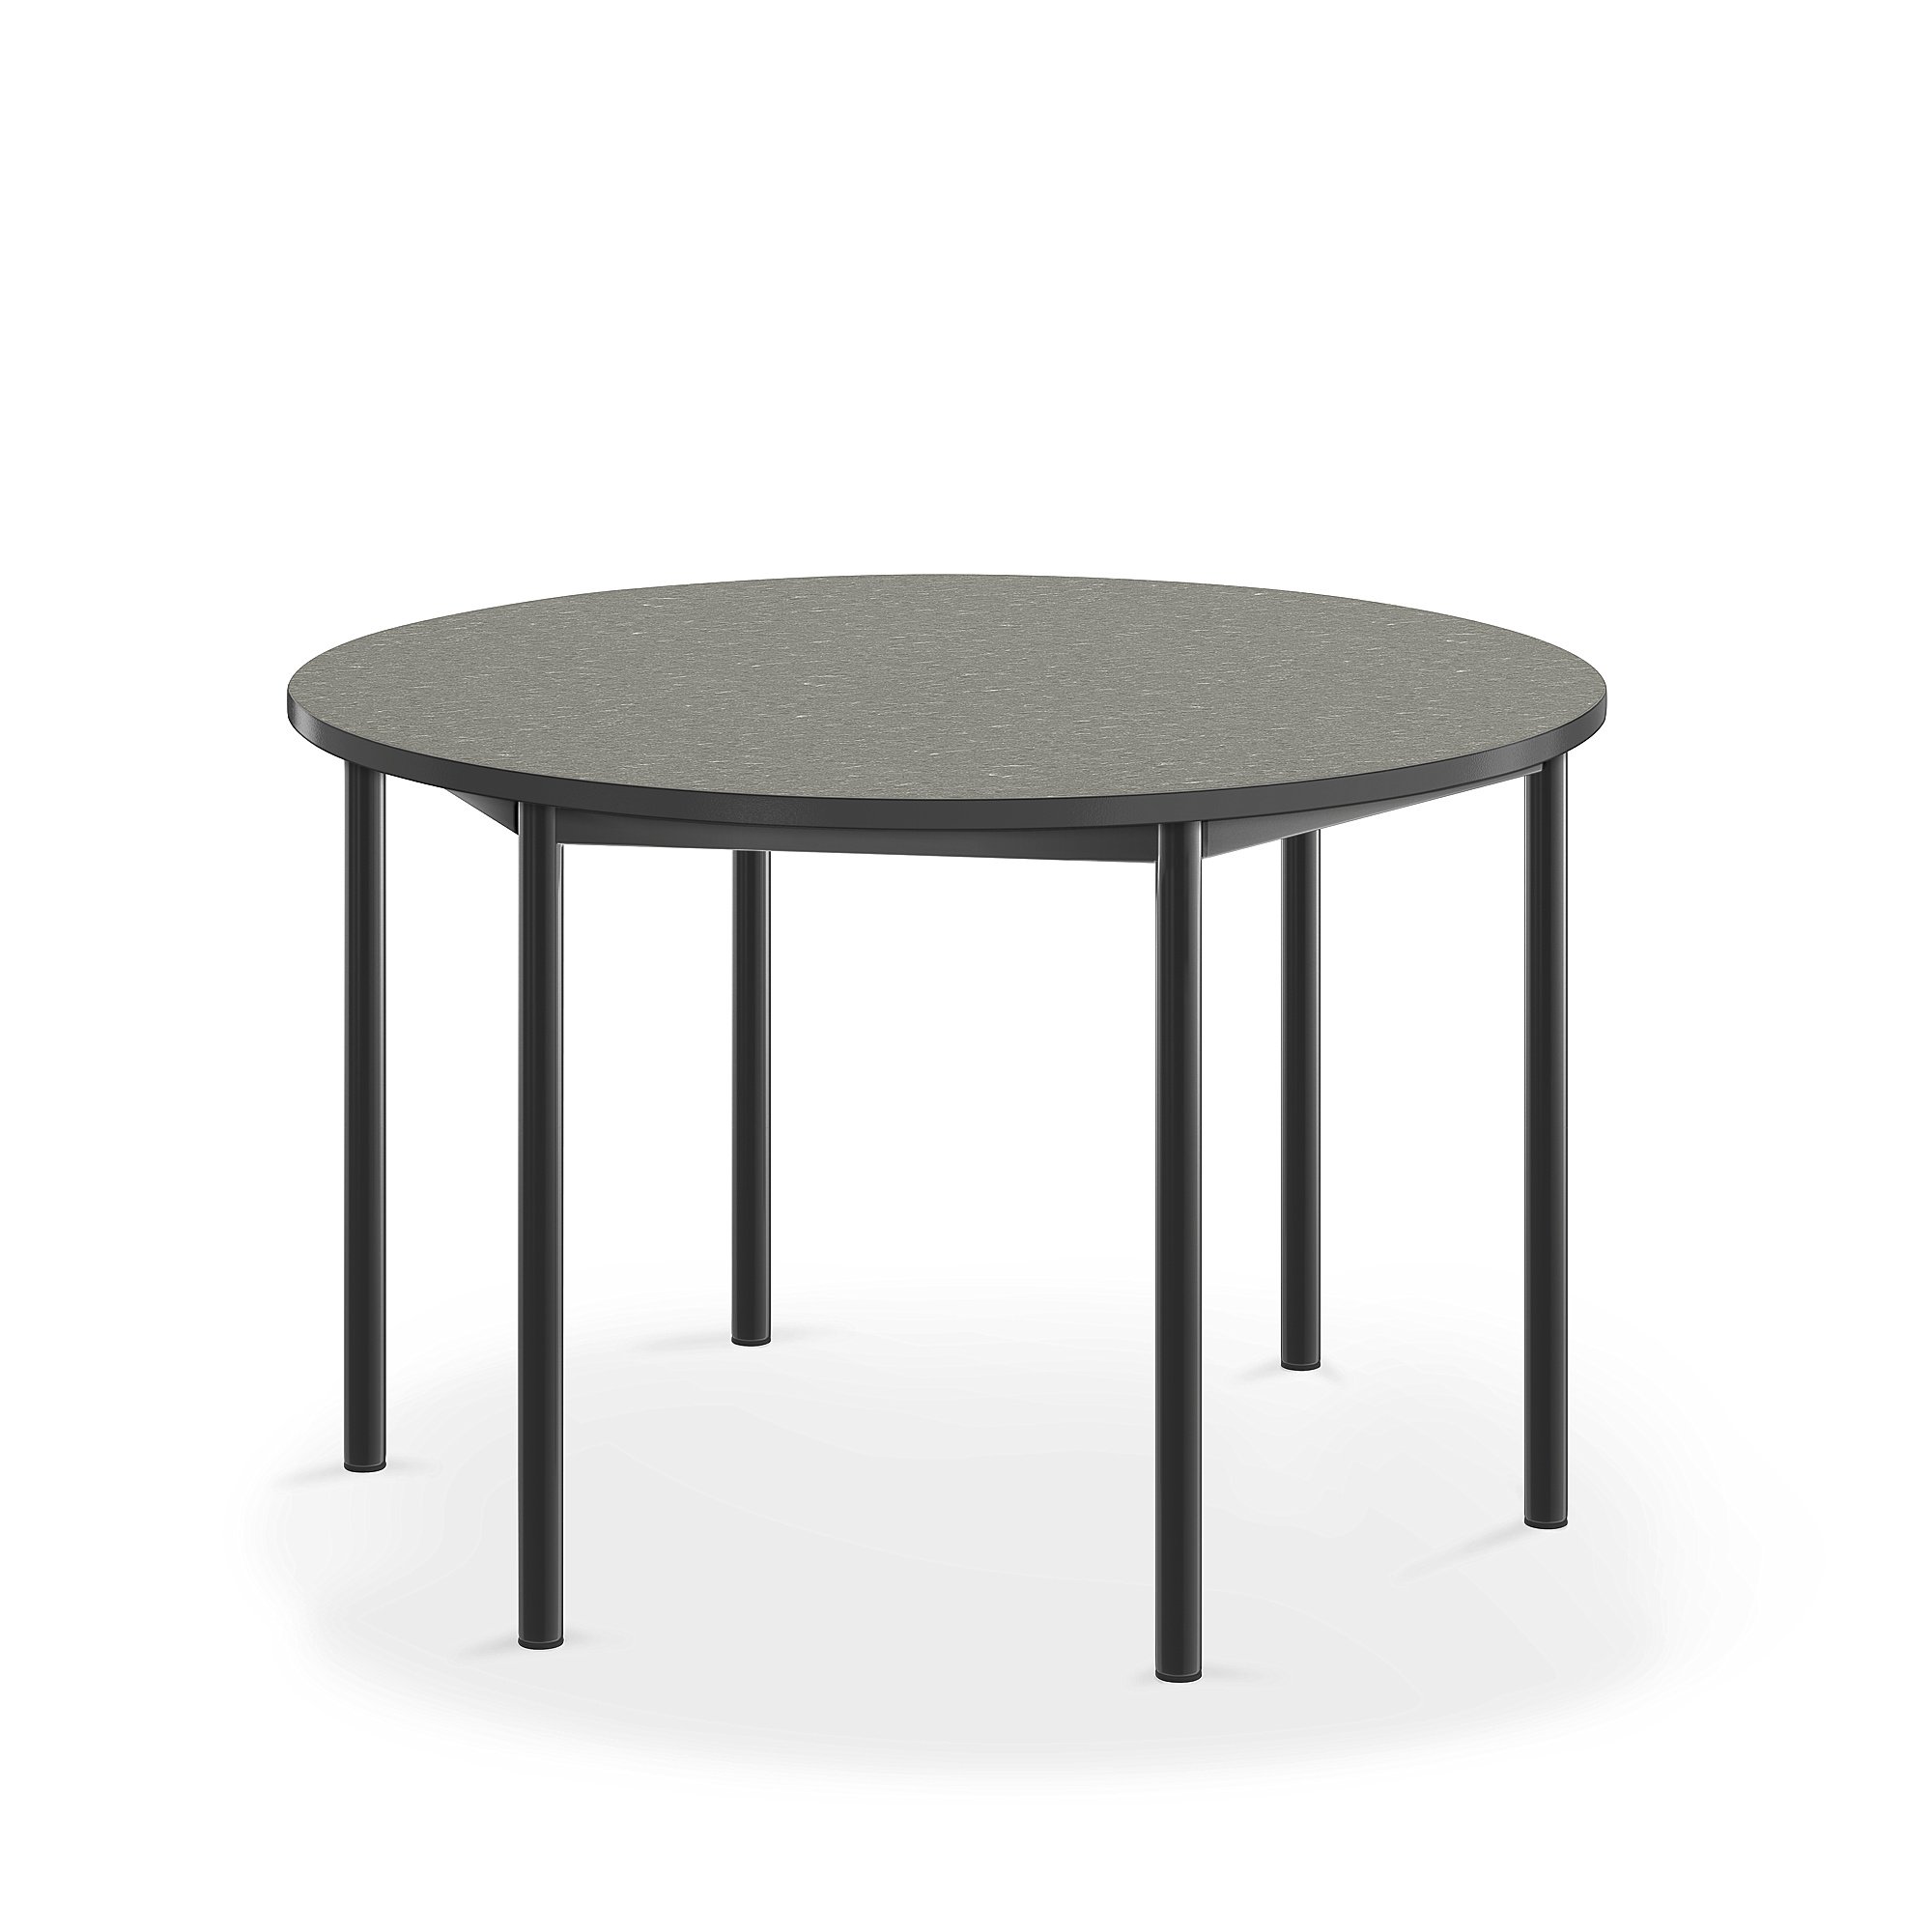 Stůl SONITUS, Ø1200x720 mm, antracitově šedé nohy, deska s linoleem, tmavě šedá